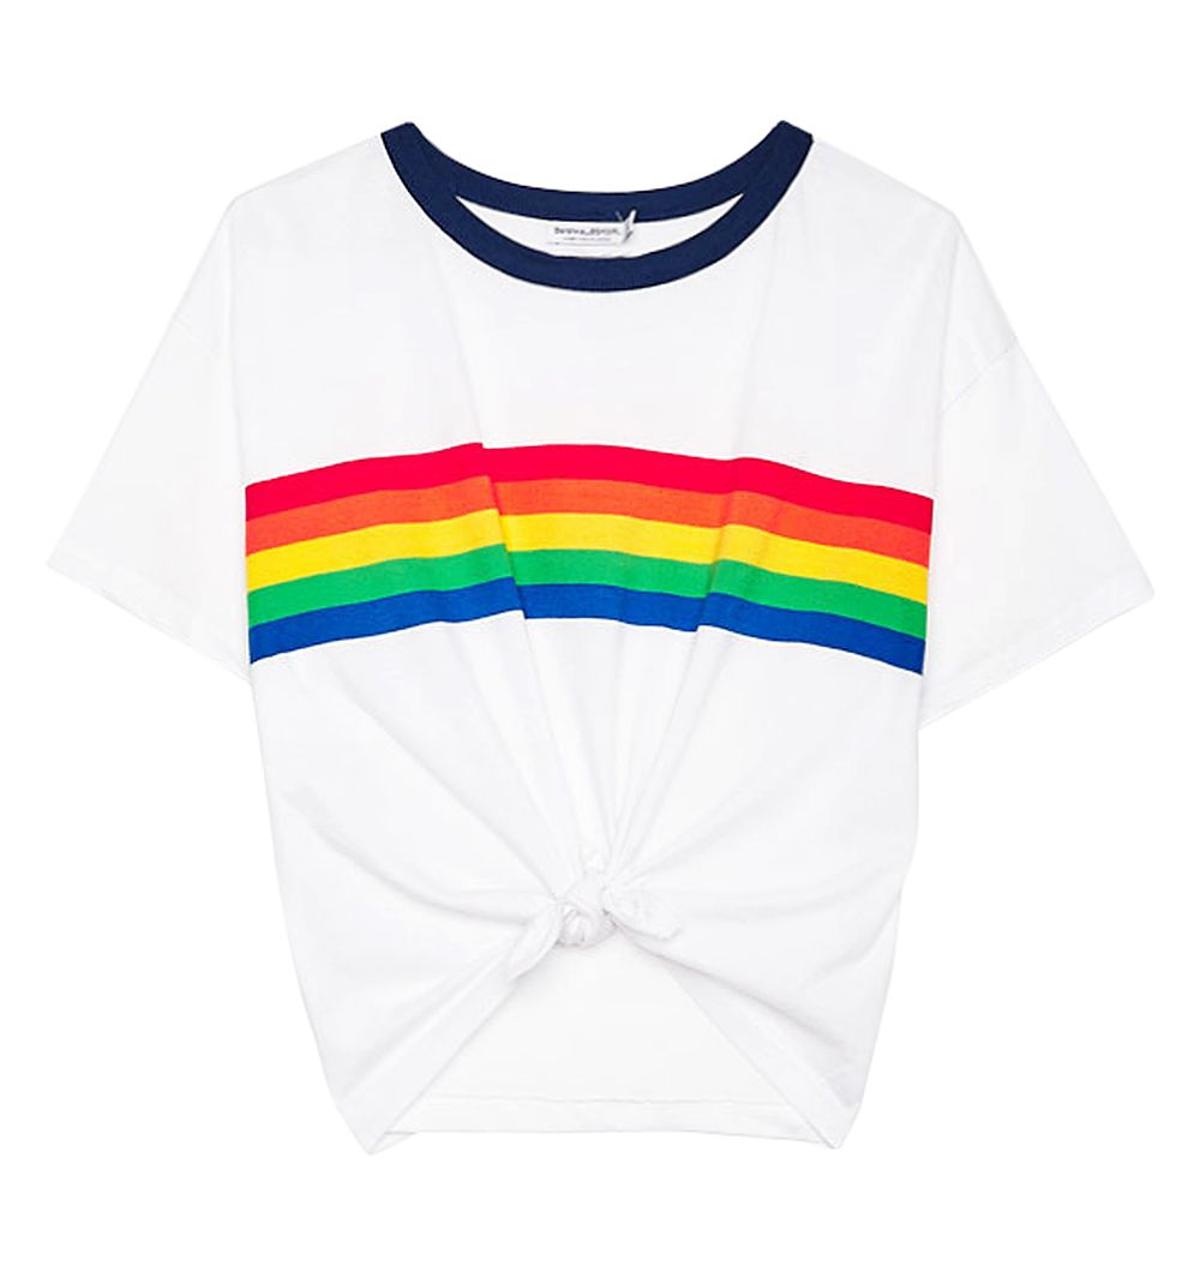 Camiseta nudo con arcoíris, de Bershka